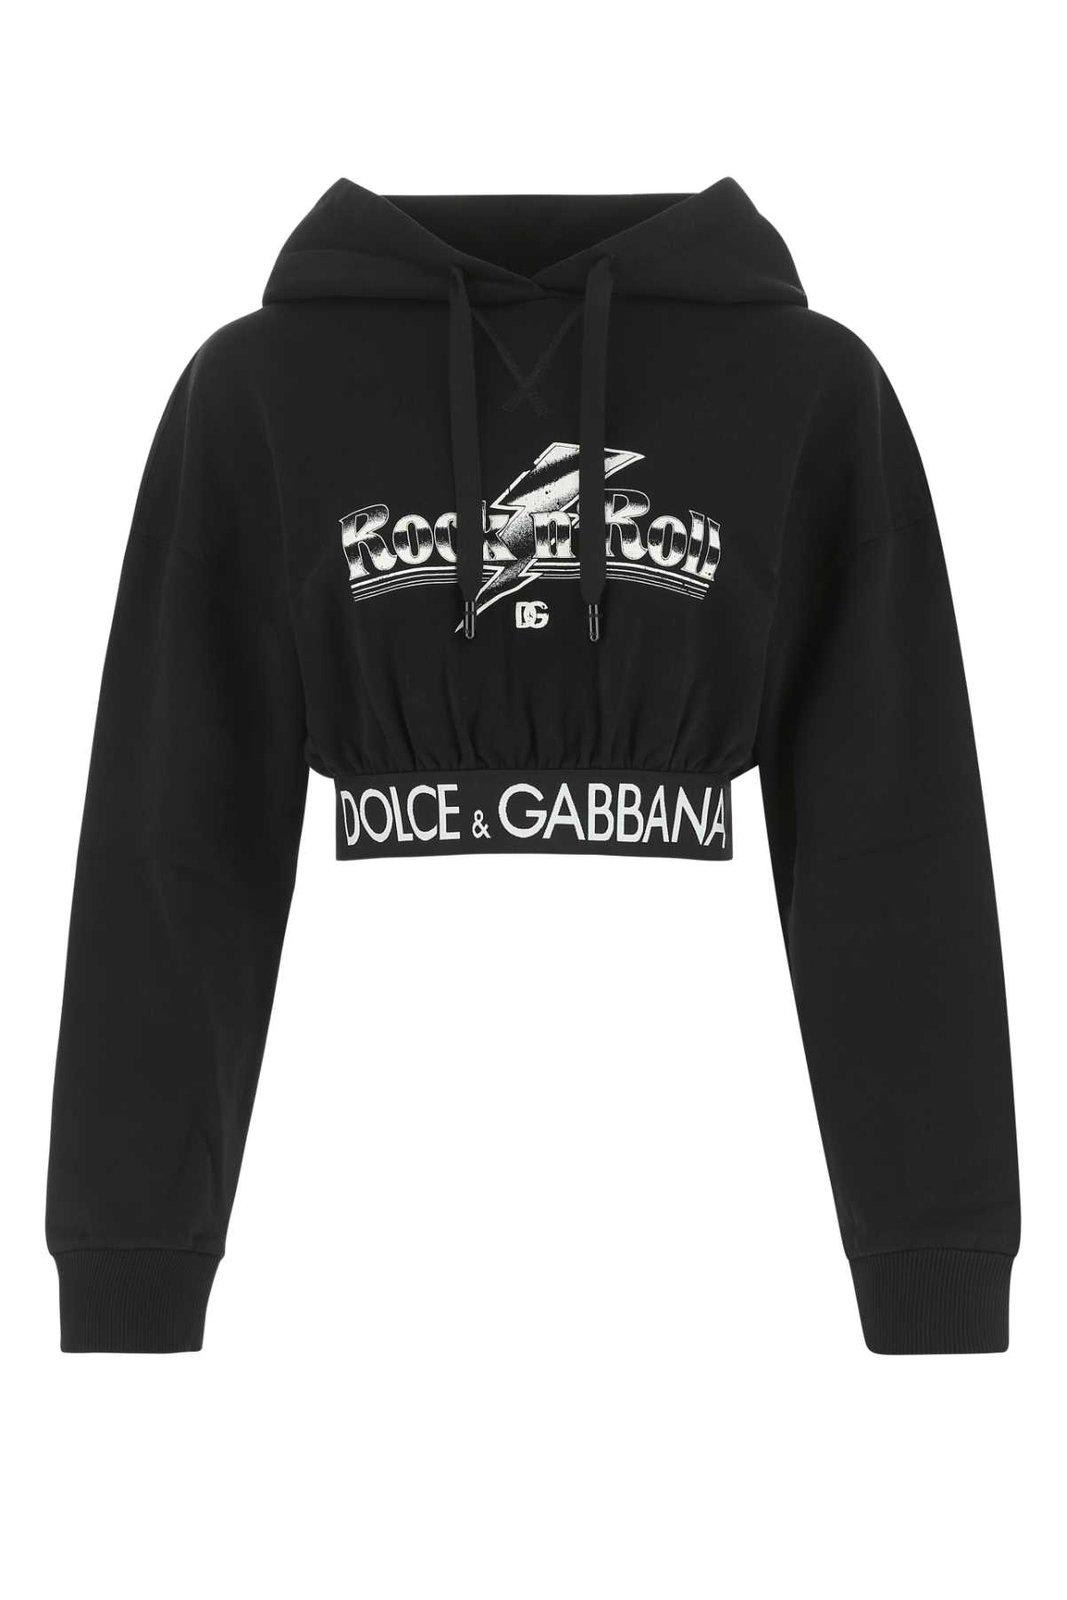 Dolce & Gabbana Long-sleeved Cropped Hoodie